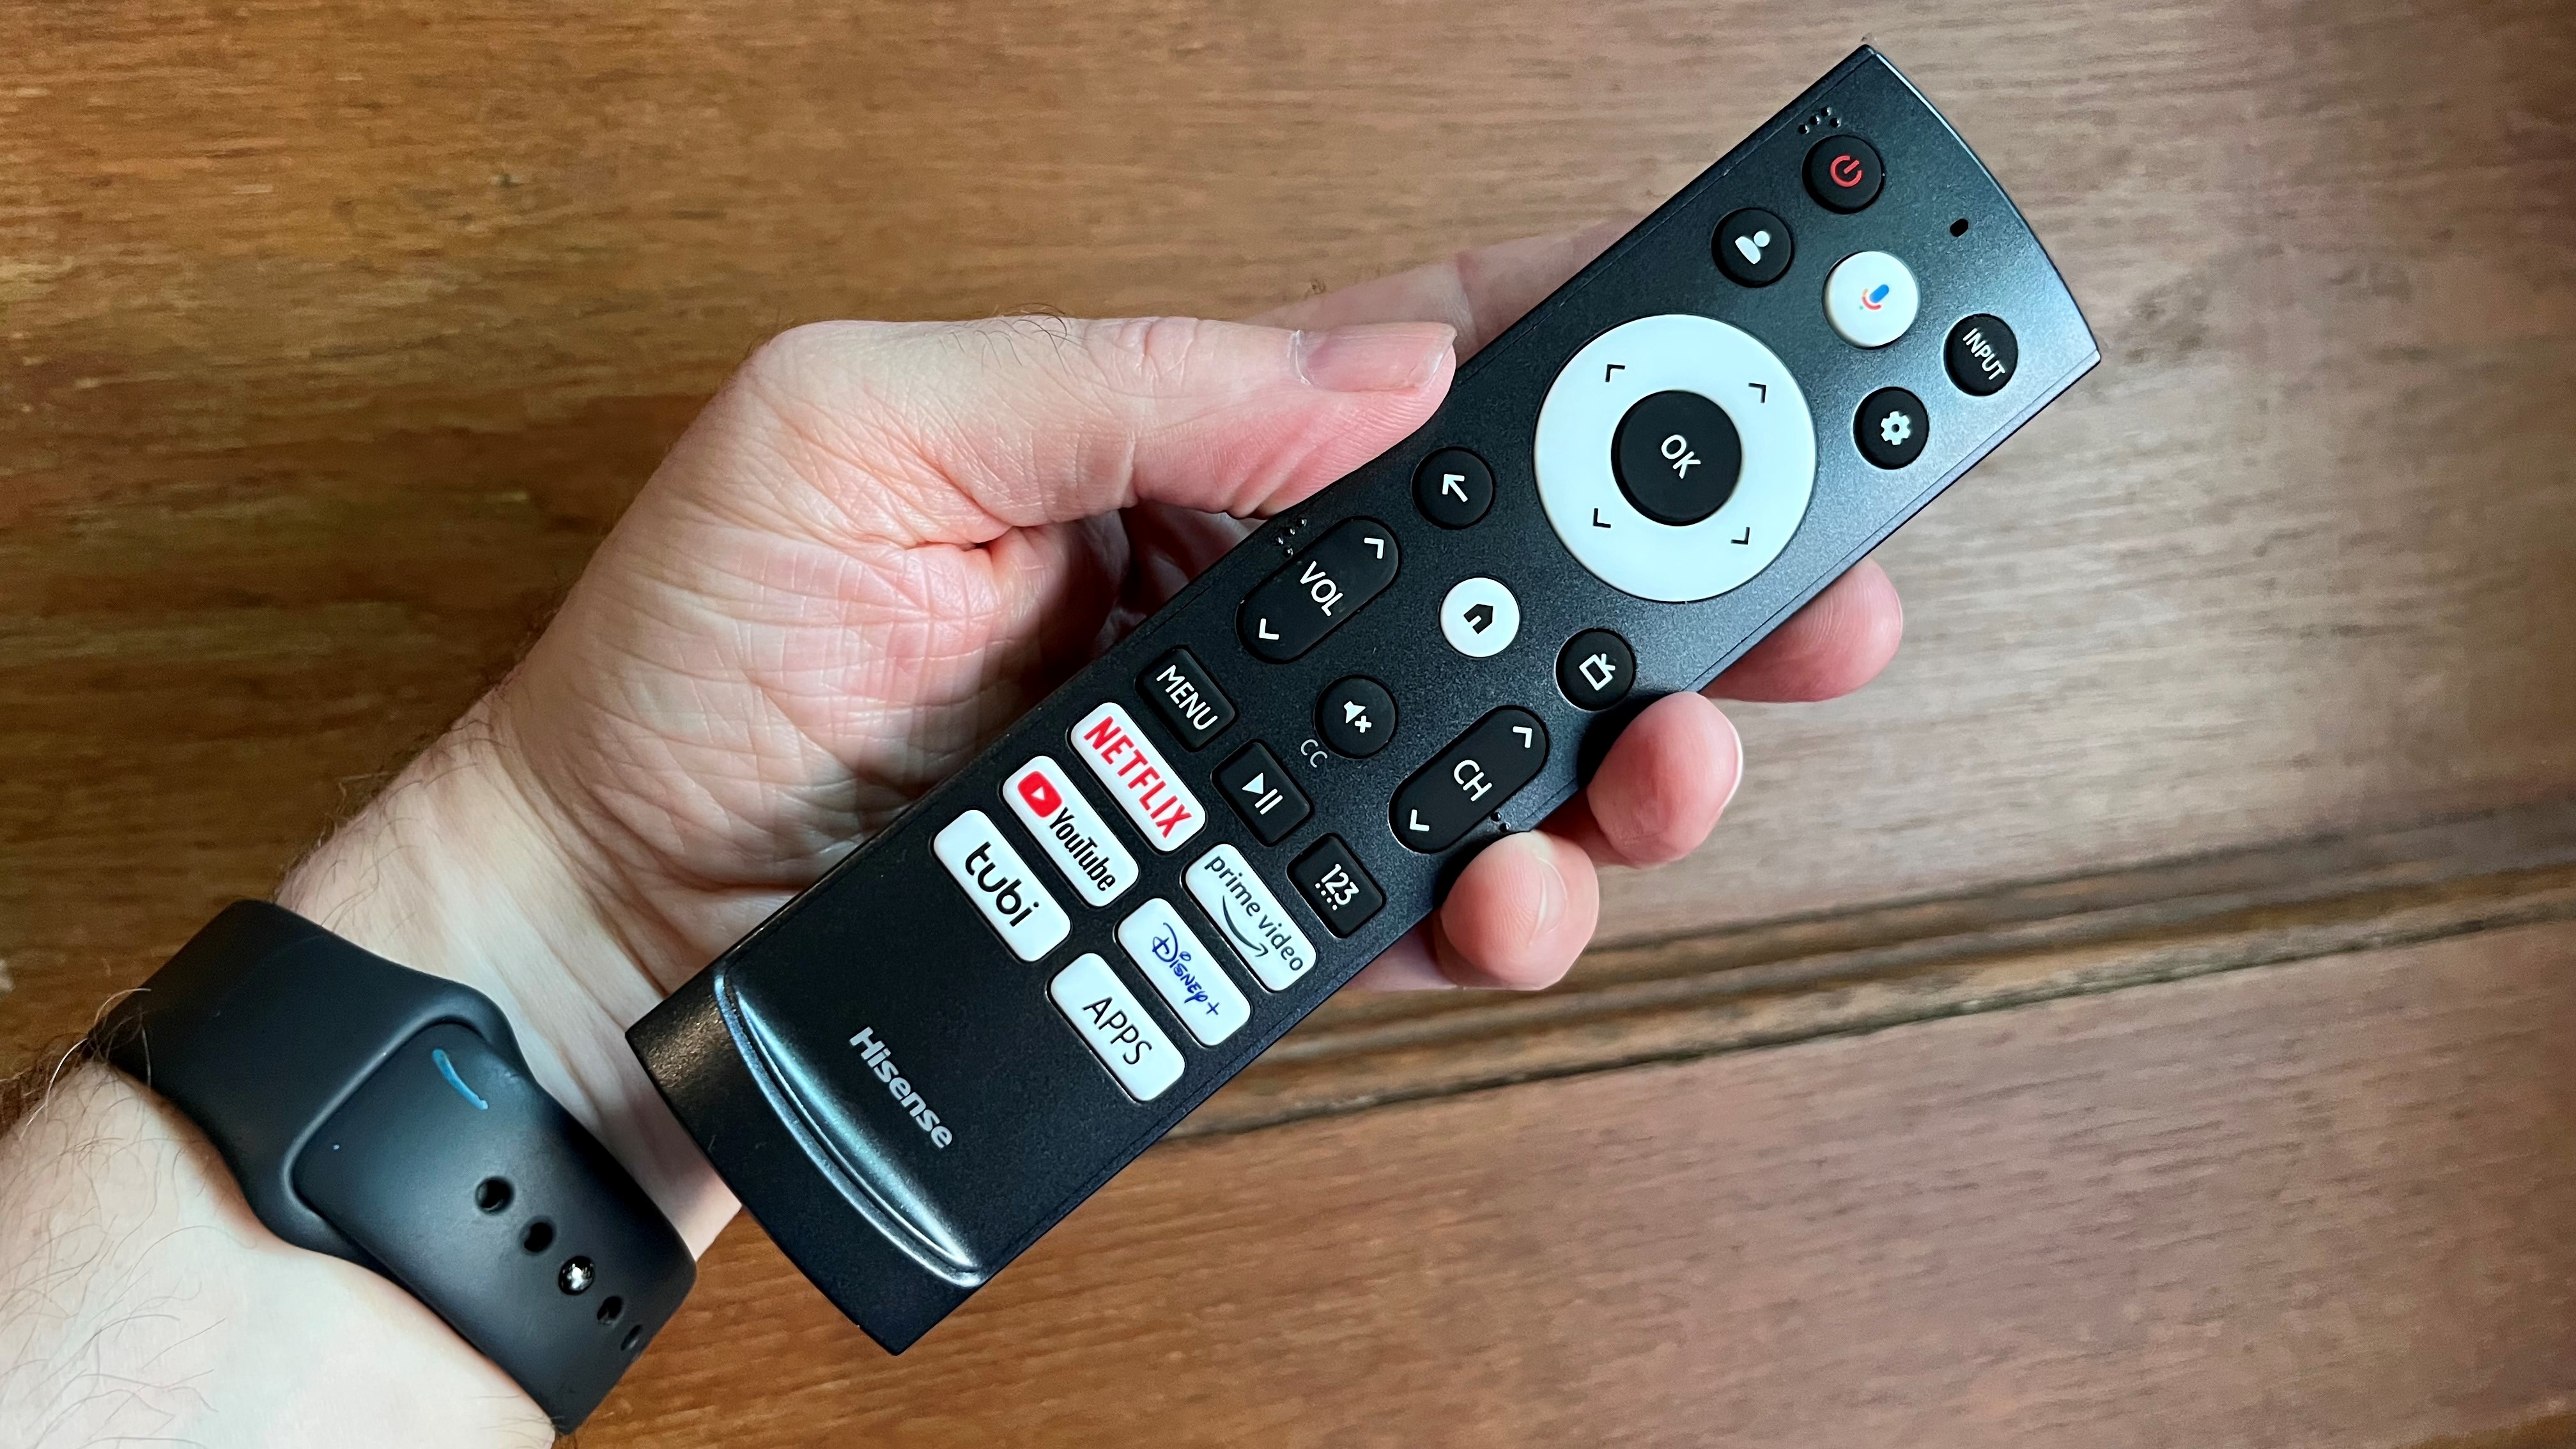 Hisense U8K remote control held in hand